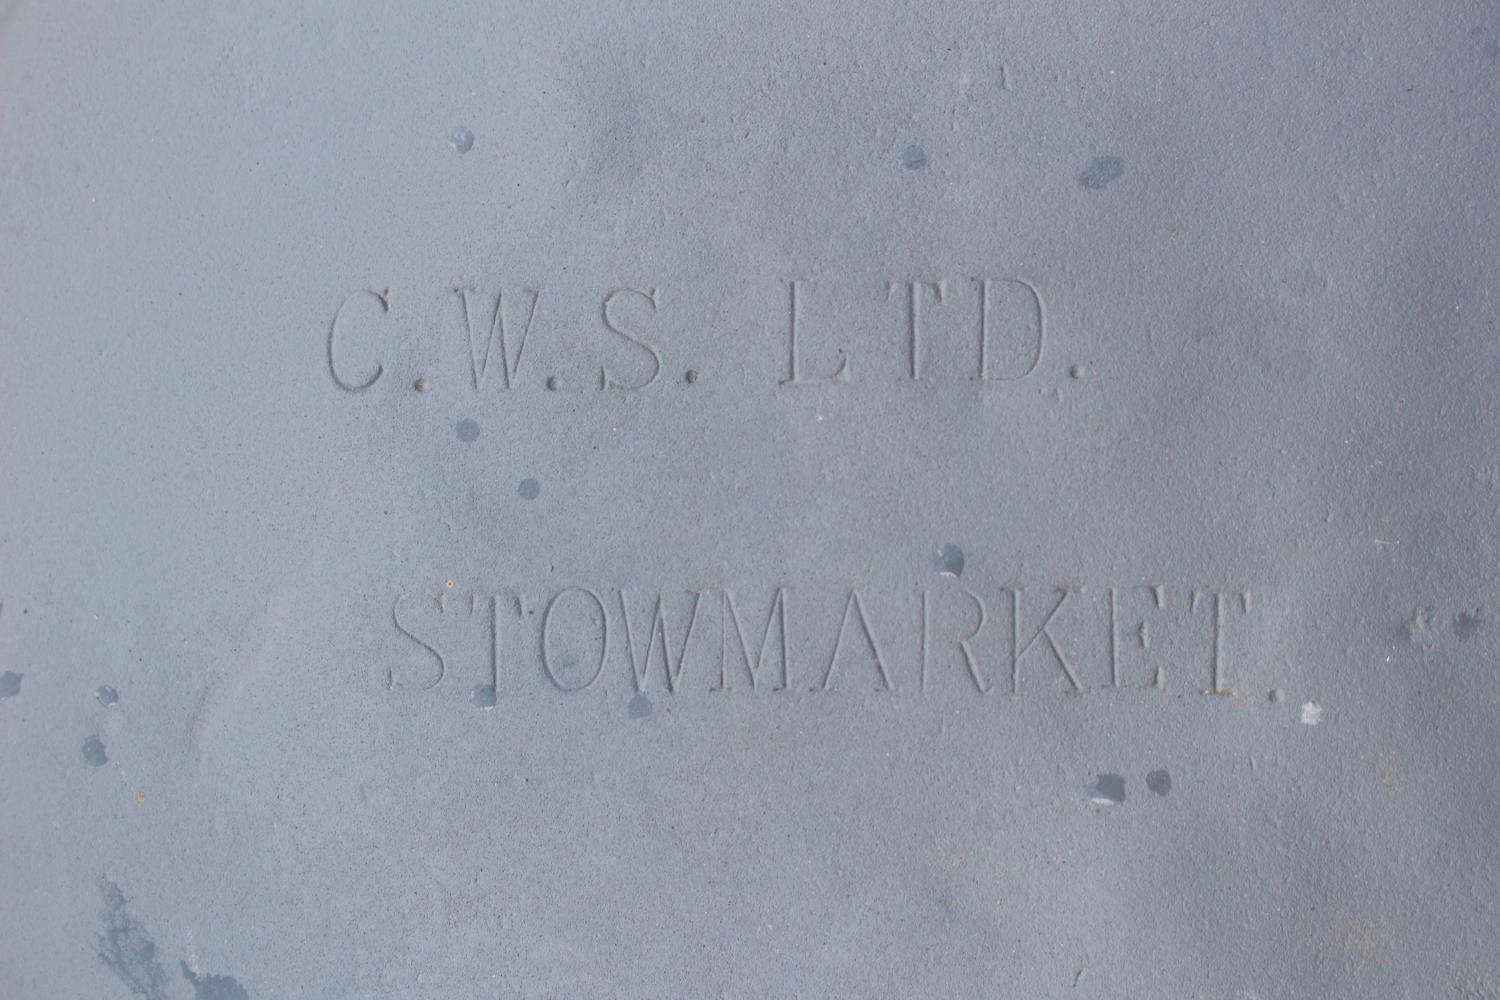 CWS Ltd of Stowmarket Milk Churn - Image 2 of 2